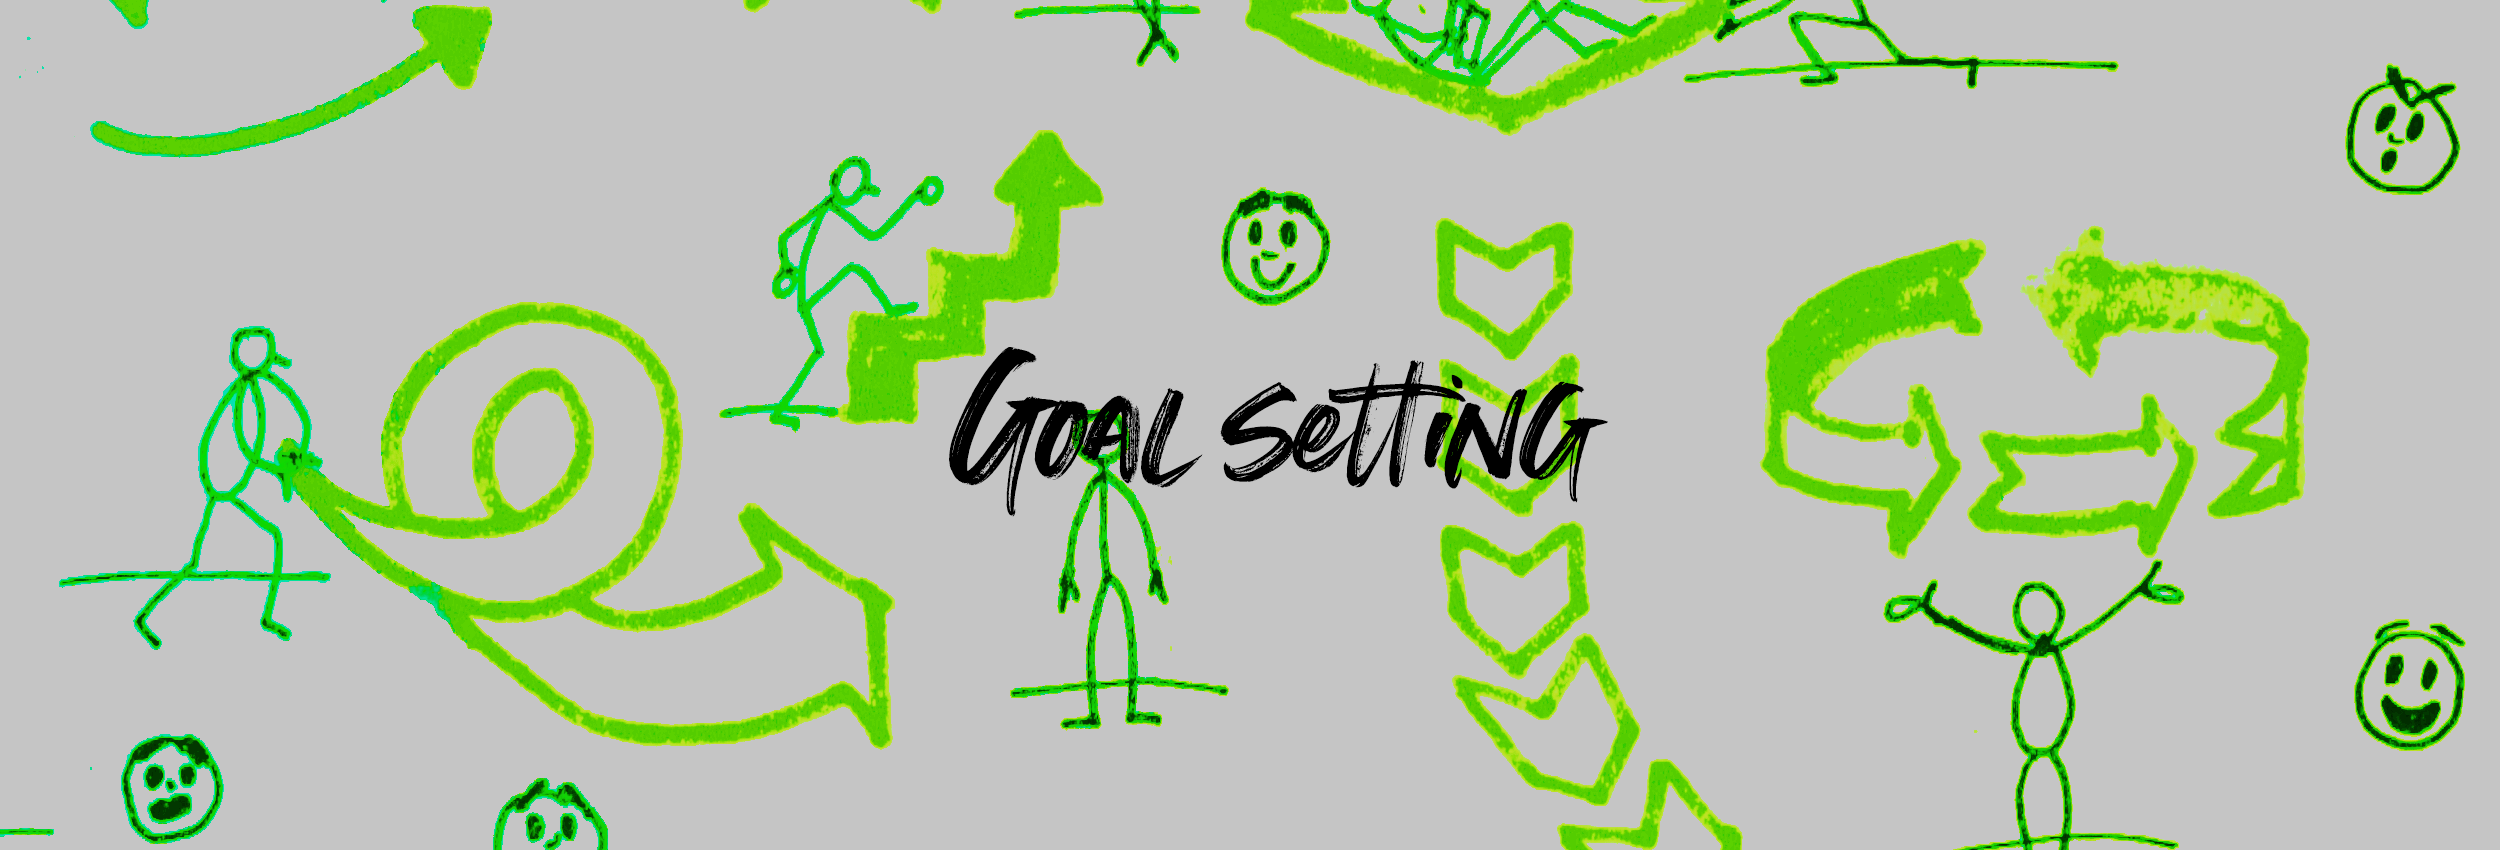 Goal setting